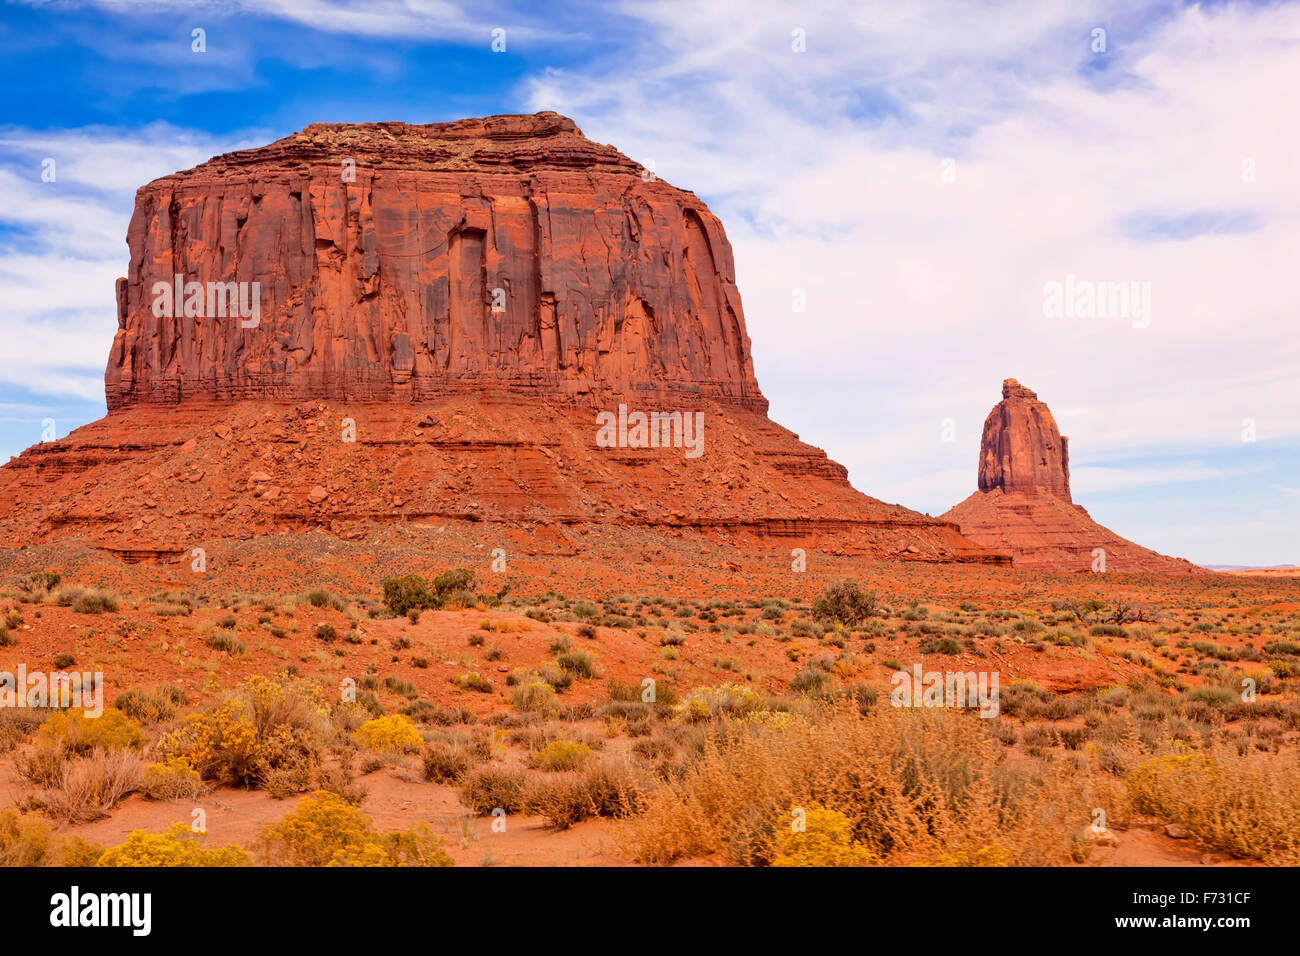 Felsformationen im Monument Valley in Arizona; Monument Valley Navajo Tribal Park und John Ford point Monument Valley National Park Stockfoto